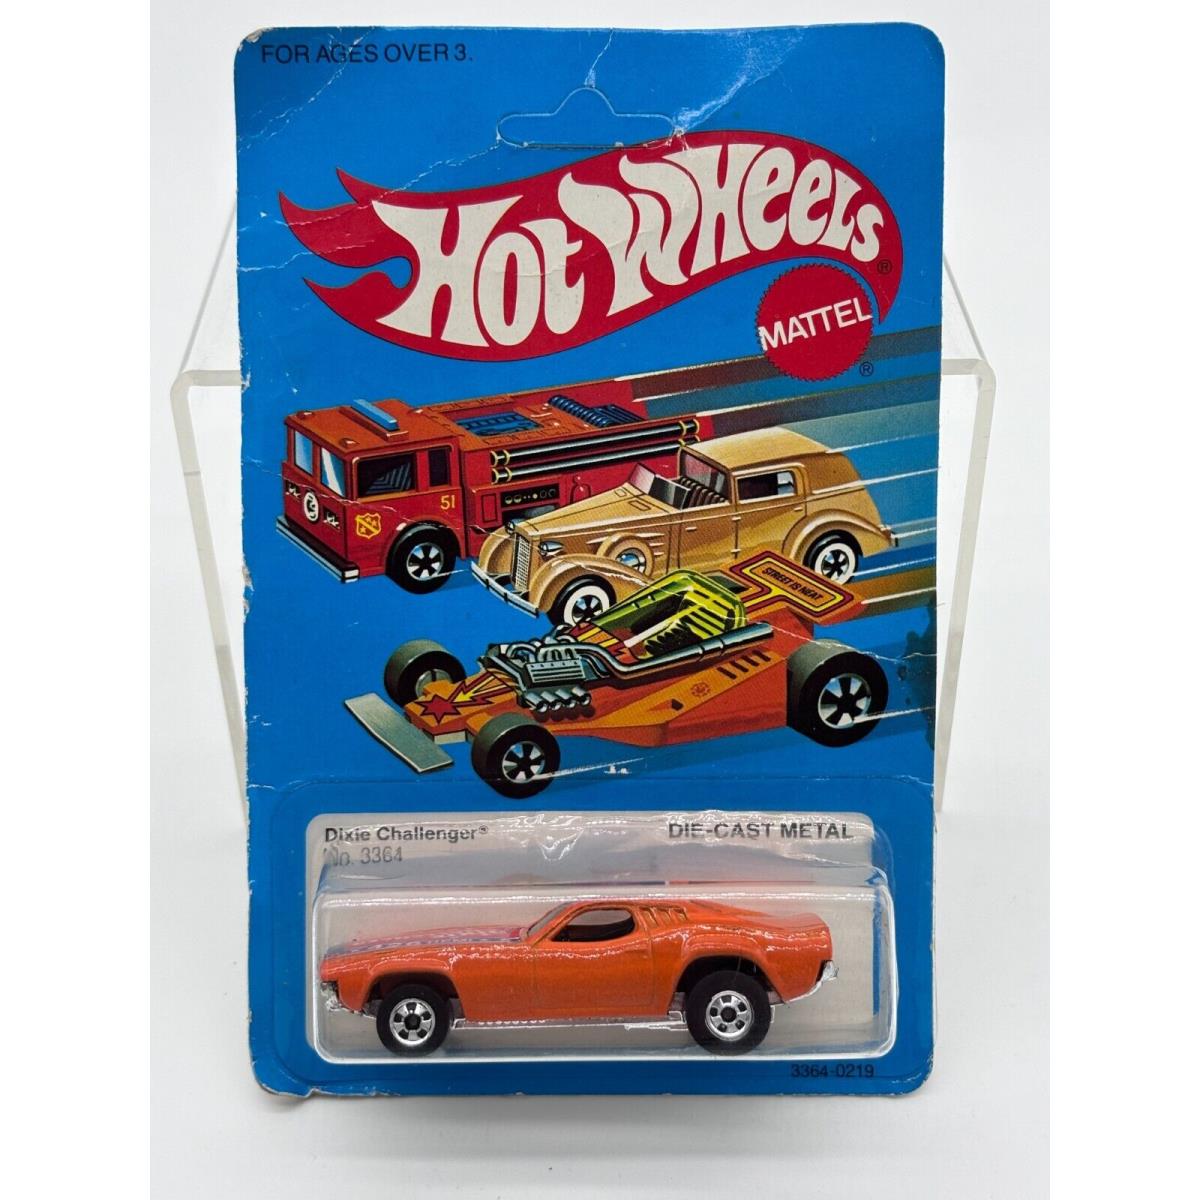 Vintage 1982 Mattel Hot Wheels Dixie Challenger Car 3364 Die Cast Metal